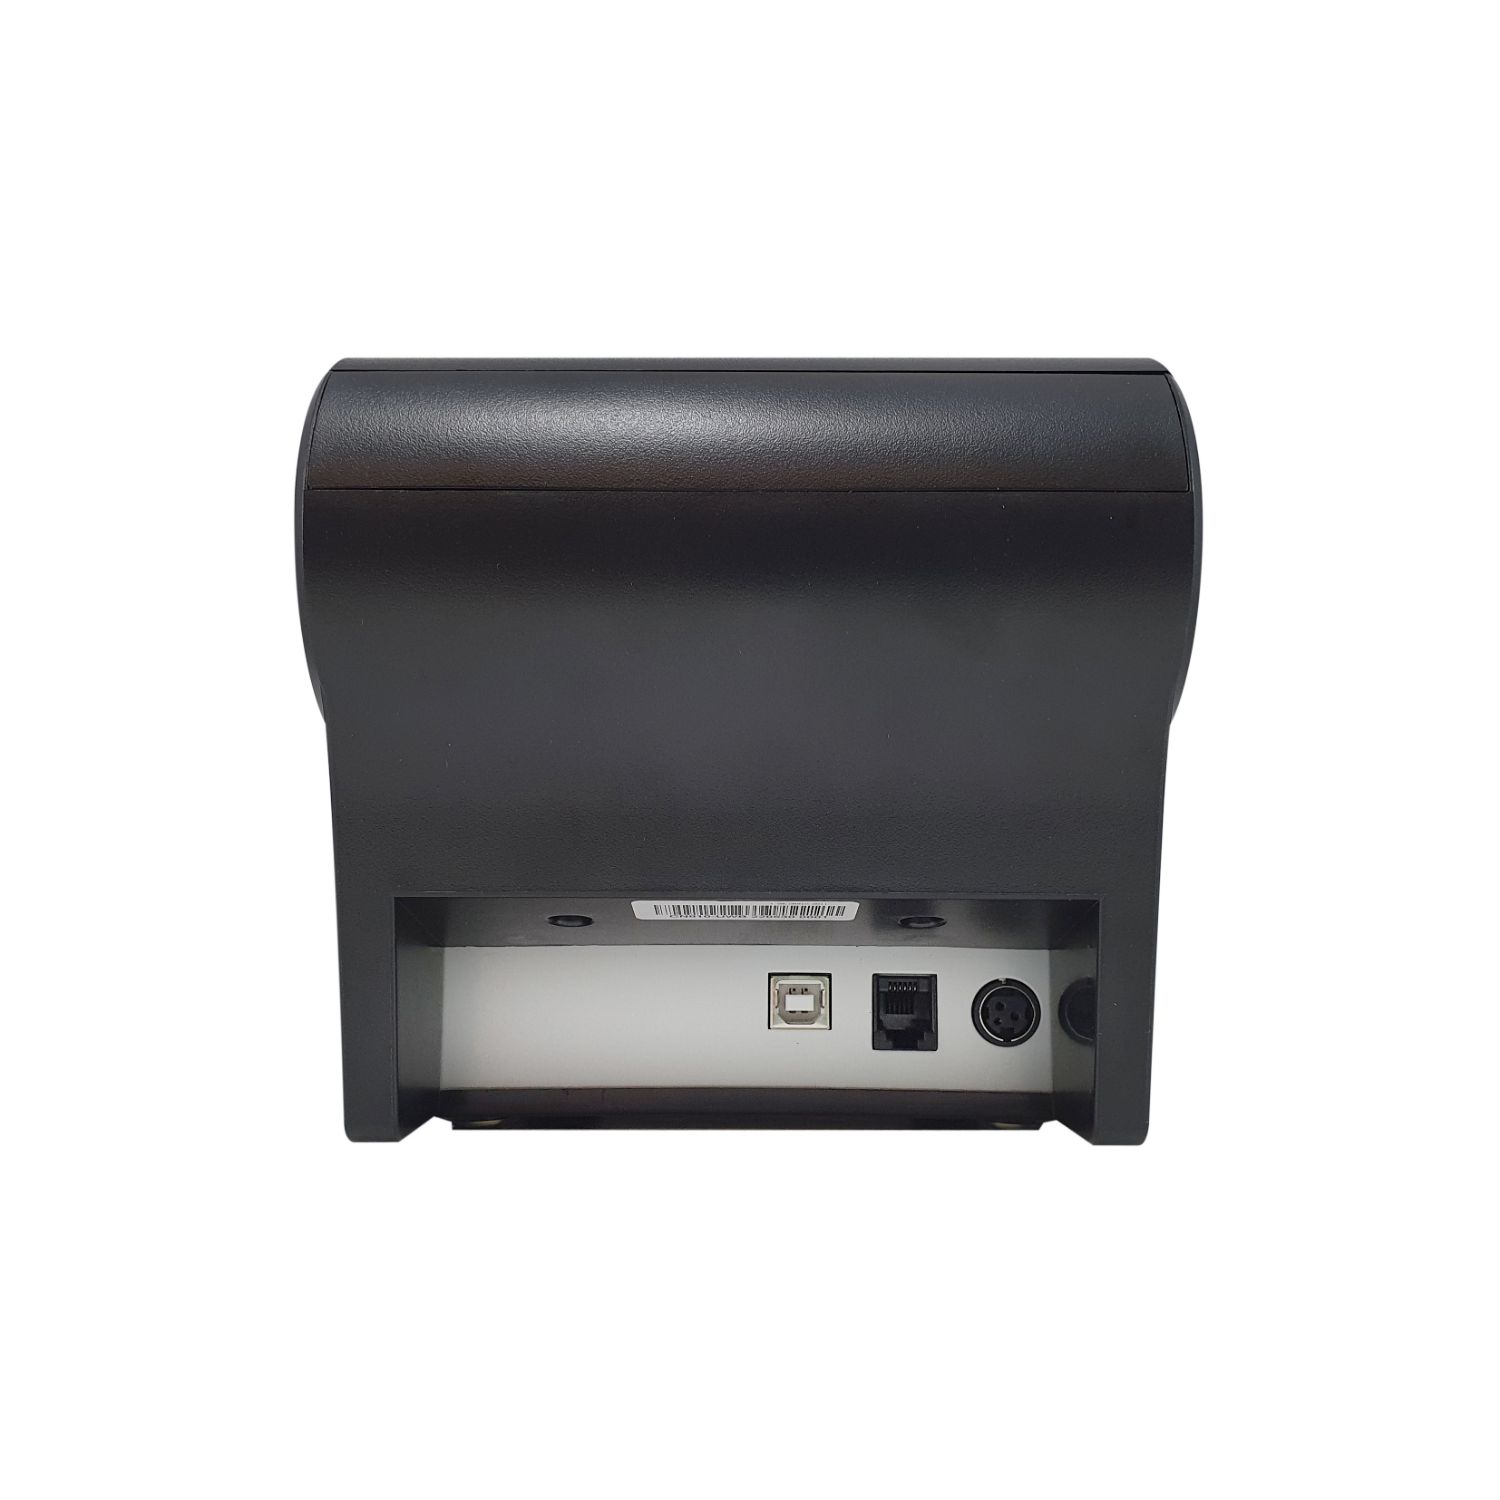 EQ351004 - Impresora Trmica EQUIP 80mm 203x203dpi USB-B 2.0 RJ11 WiFi Bluetooth Corte Manual/Automtico Negra (EQ351004)